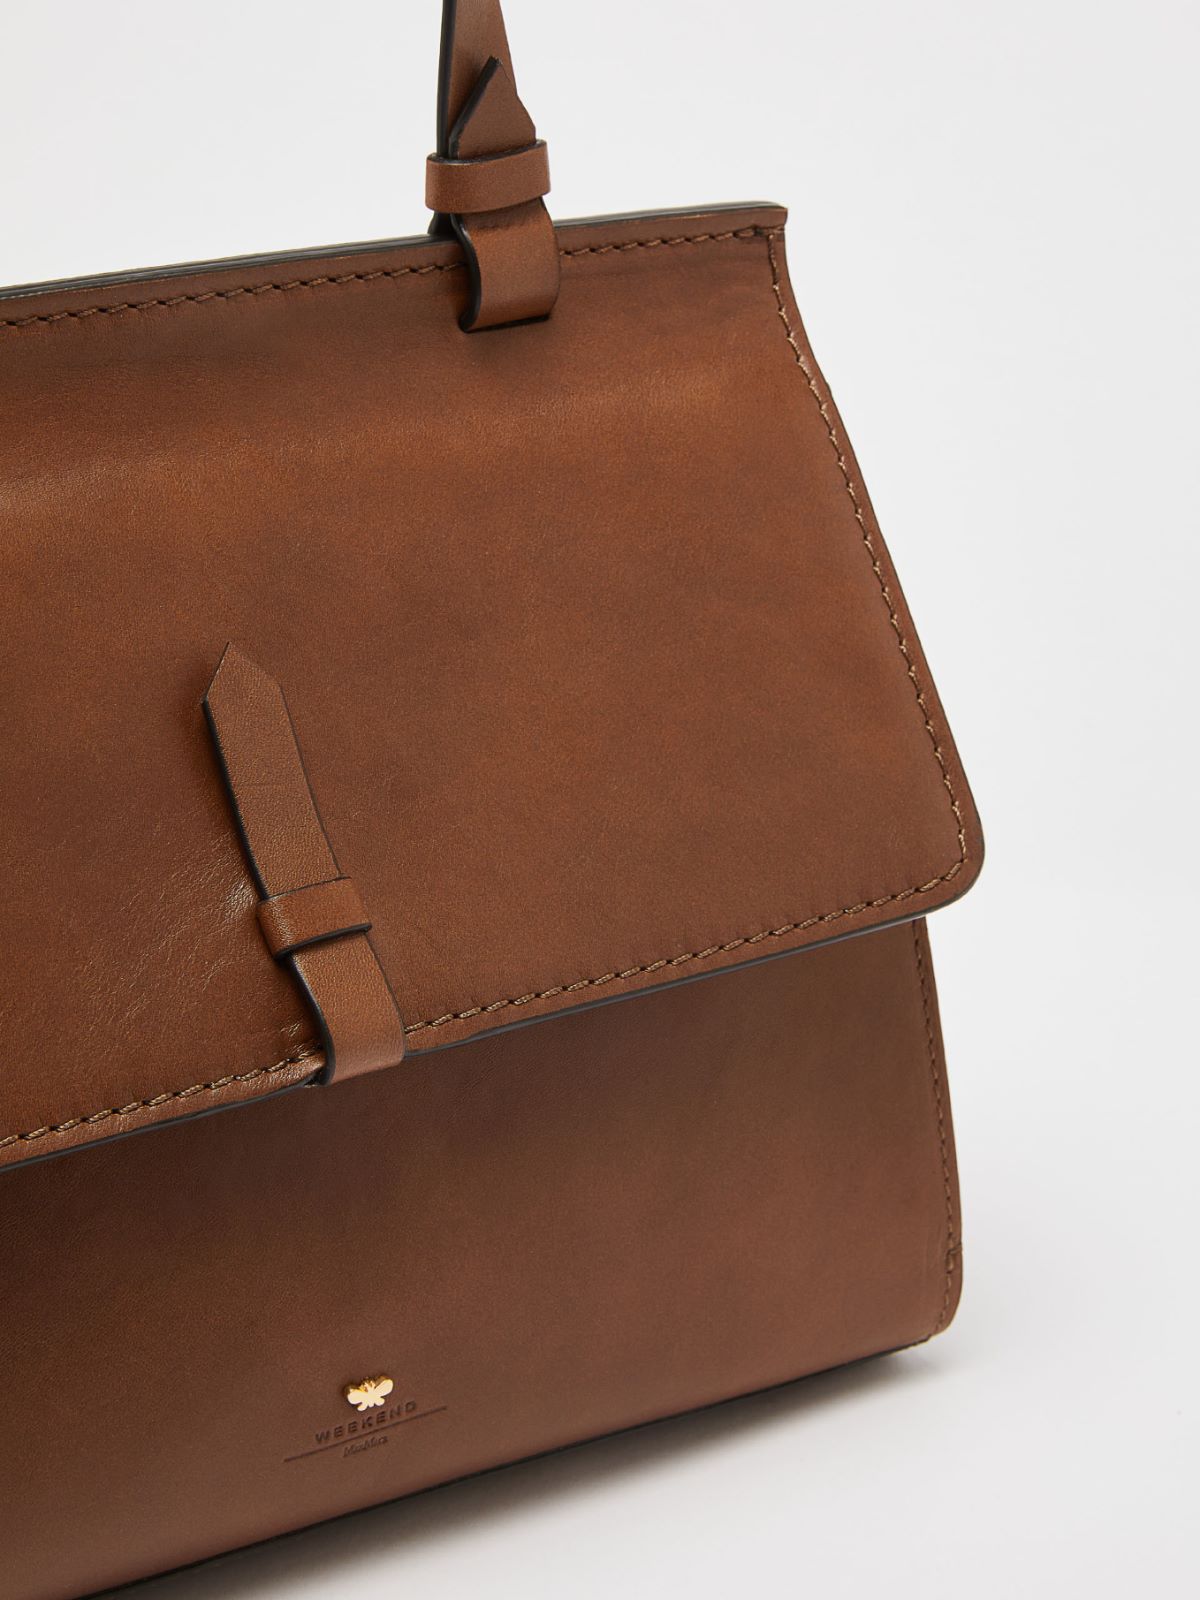 Handled briefcase - TOBACCO - Weekend Max Mara - 4